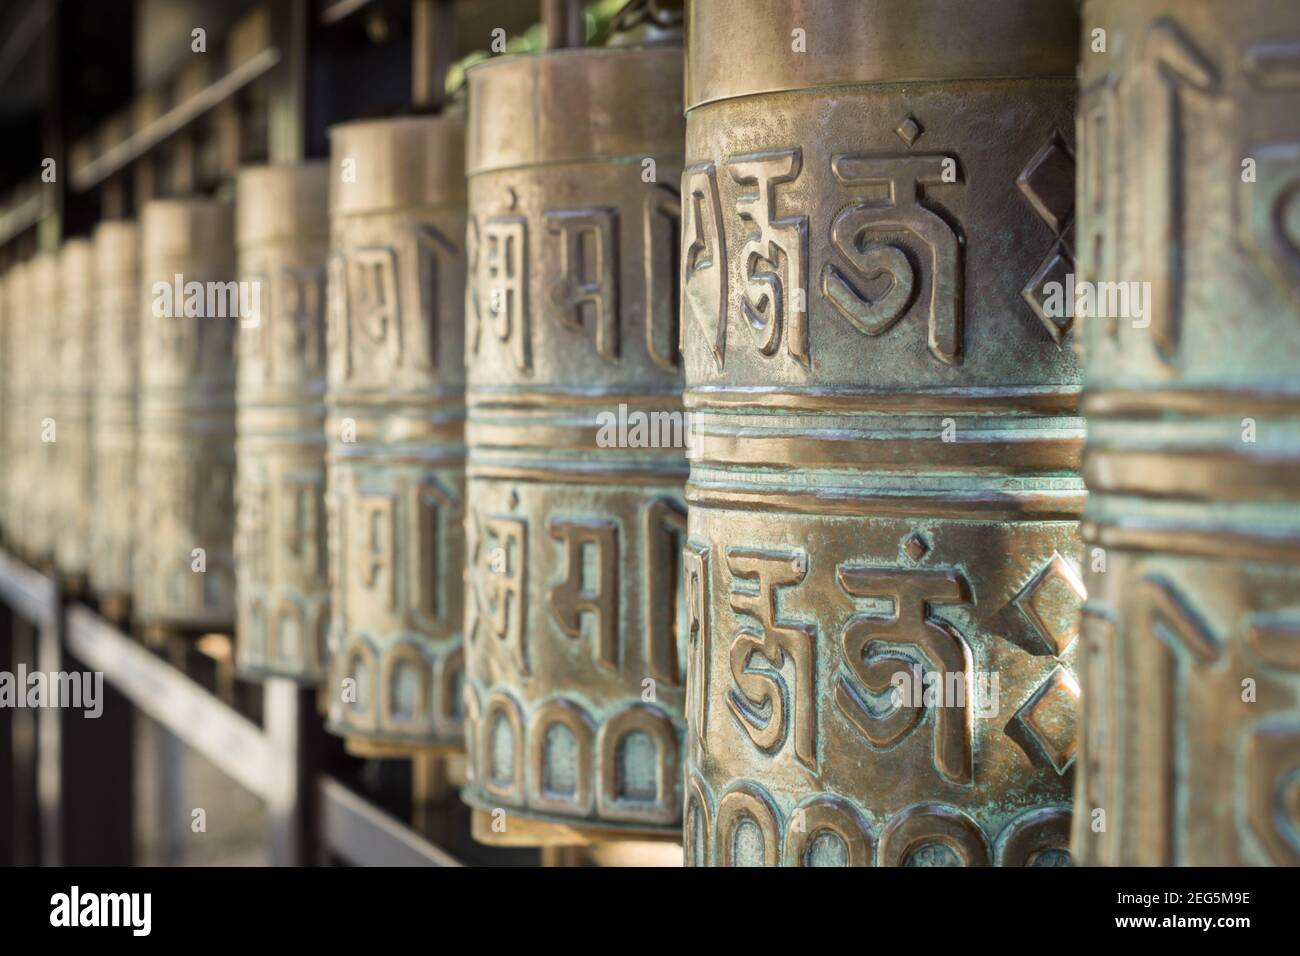 Close up detail of Sanskrit writing on bronze Tibetan style Buddhist prayer wheels at Kodaiji temple in Kyoto, Japan Stock Photo